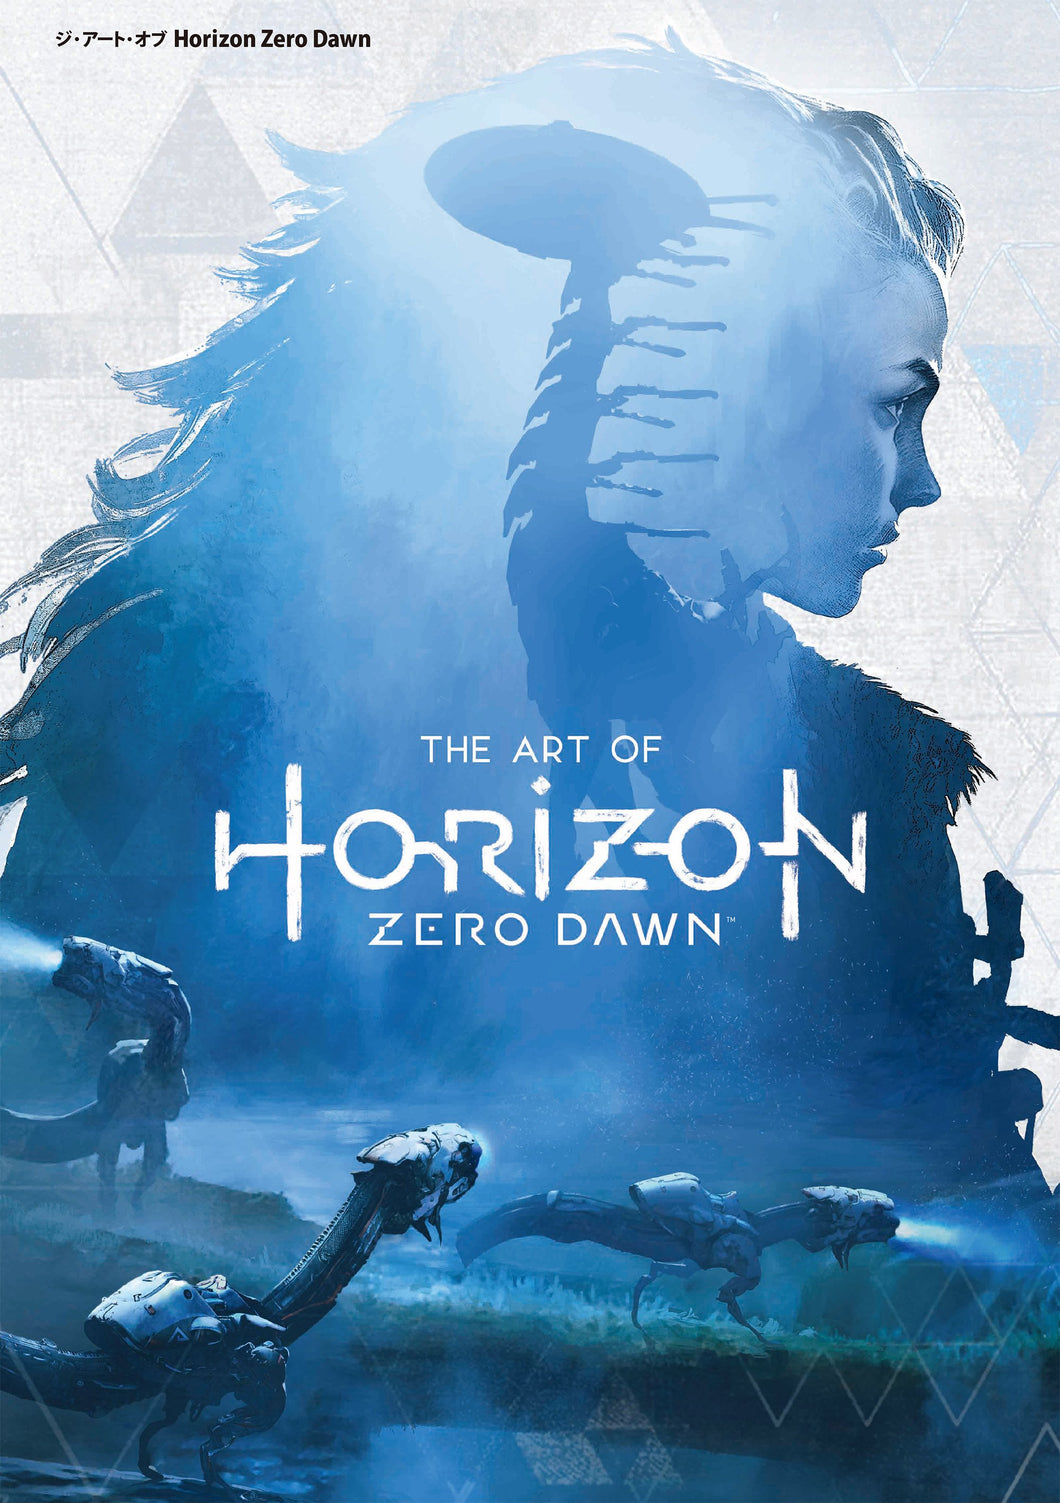 The Art of Horizon Zero Dawn